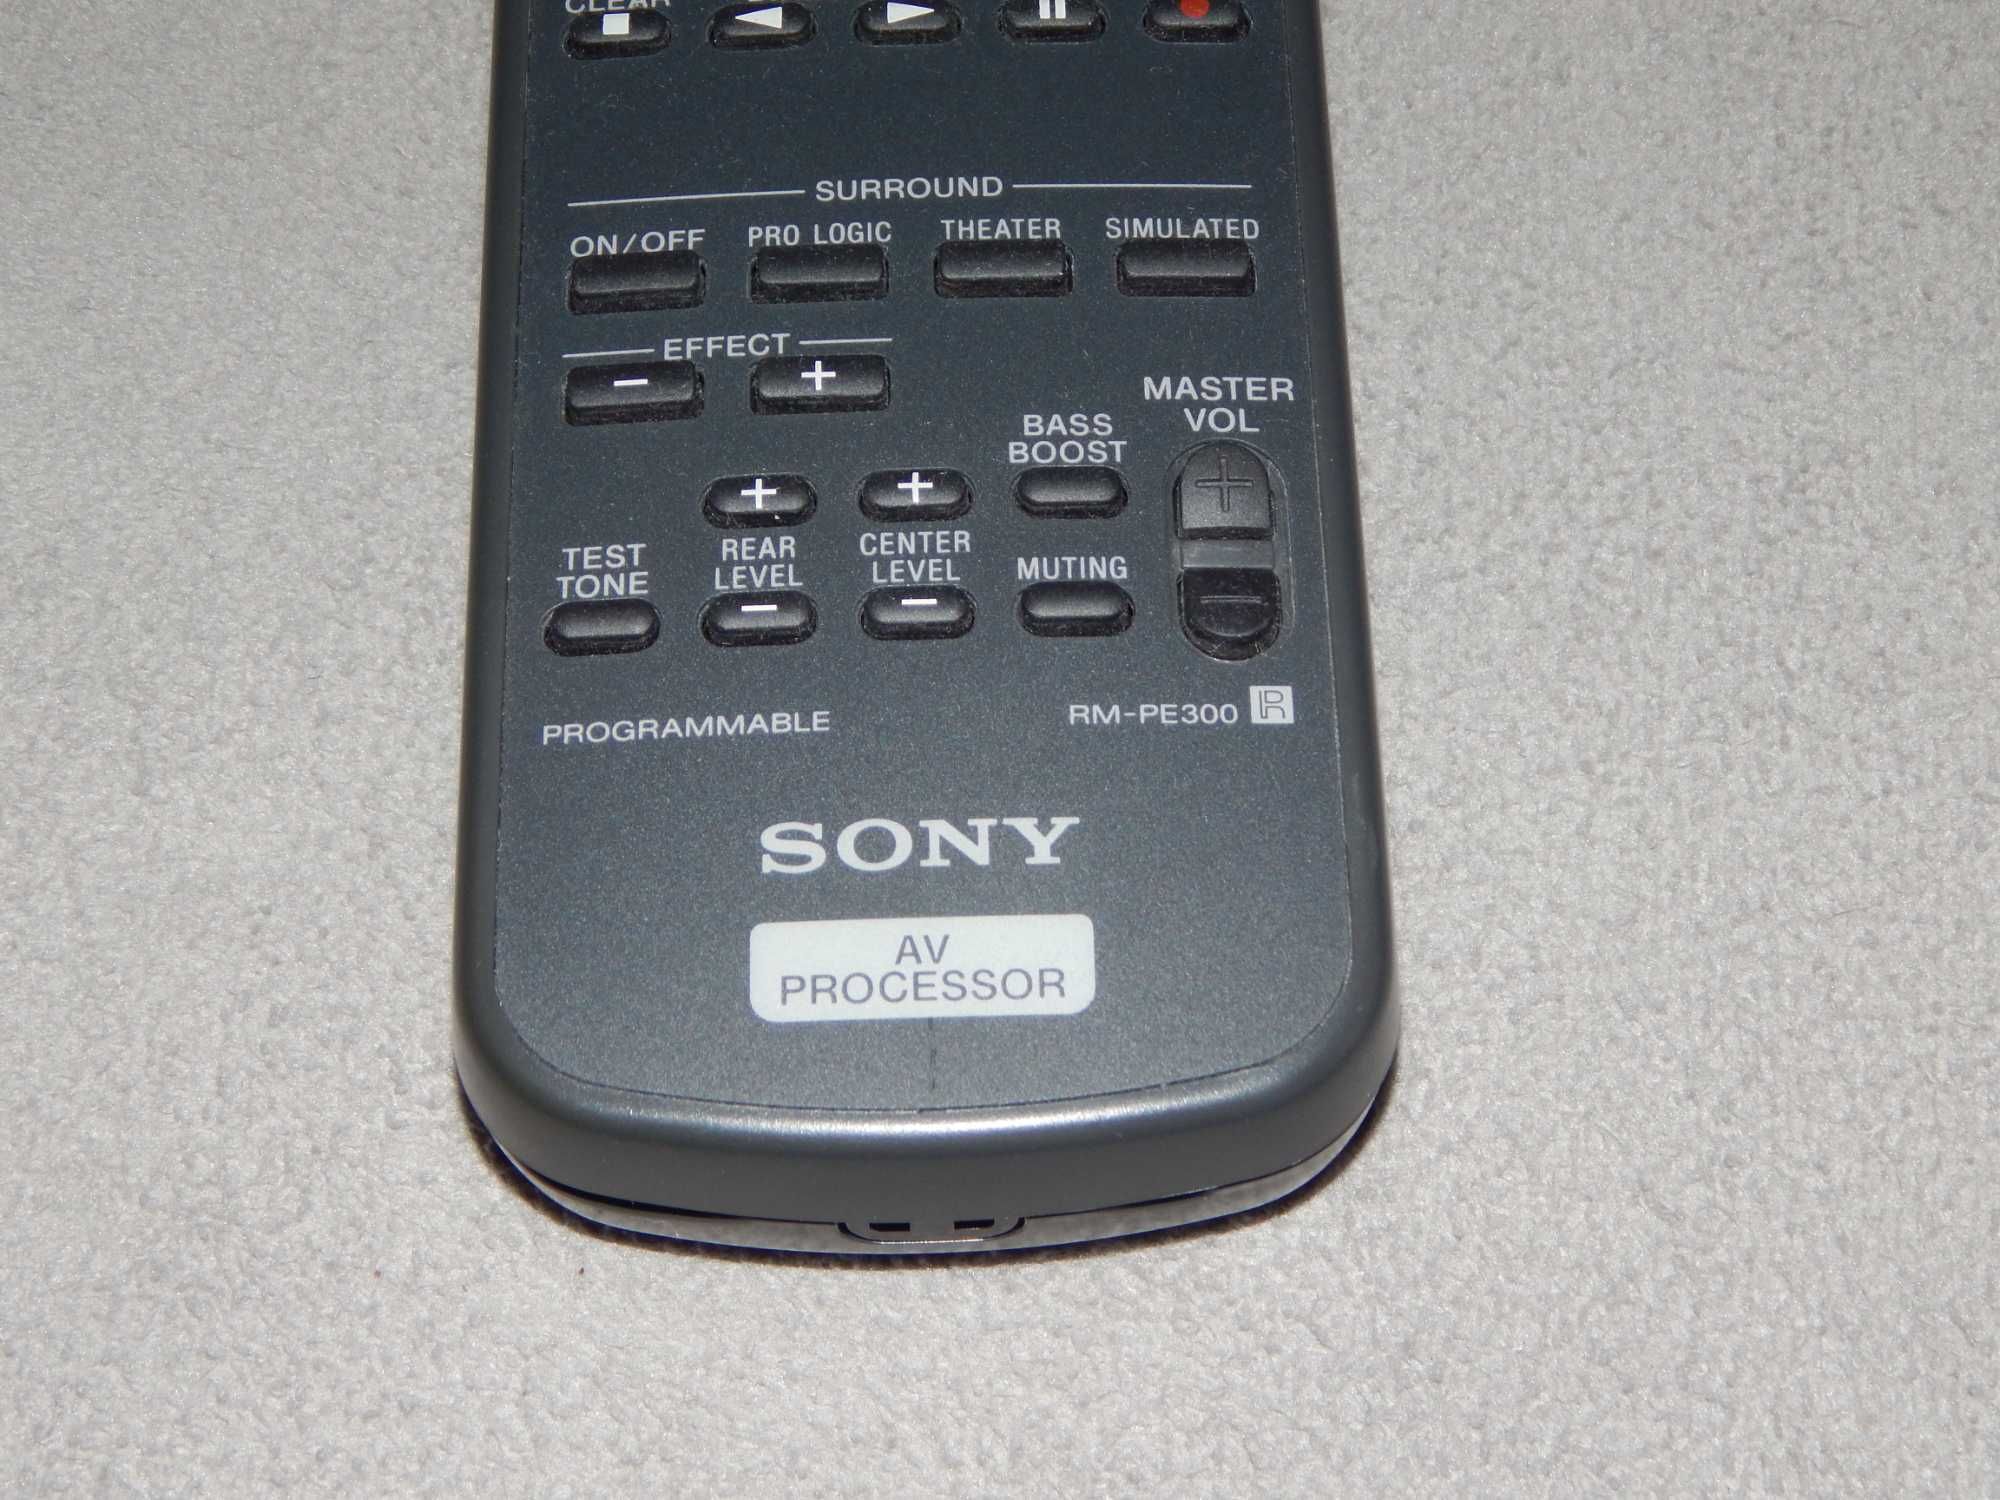 SONY RM-PE300 telecomanda av processor